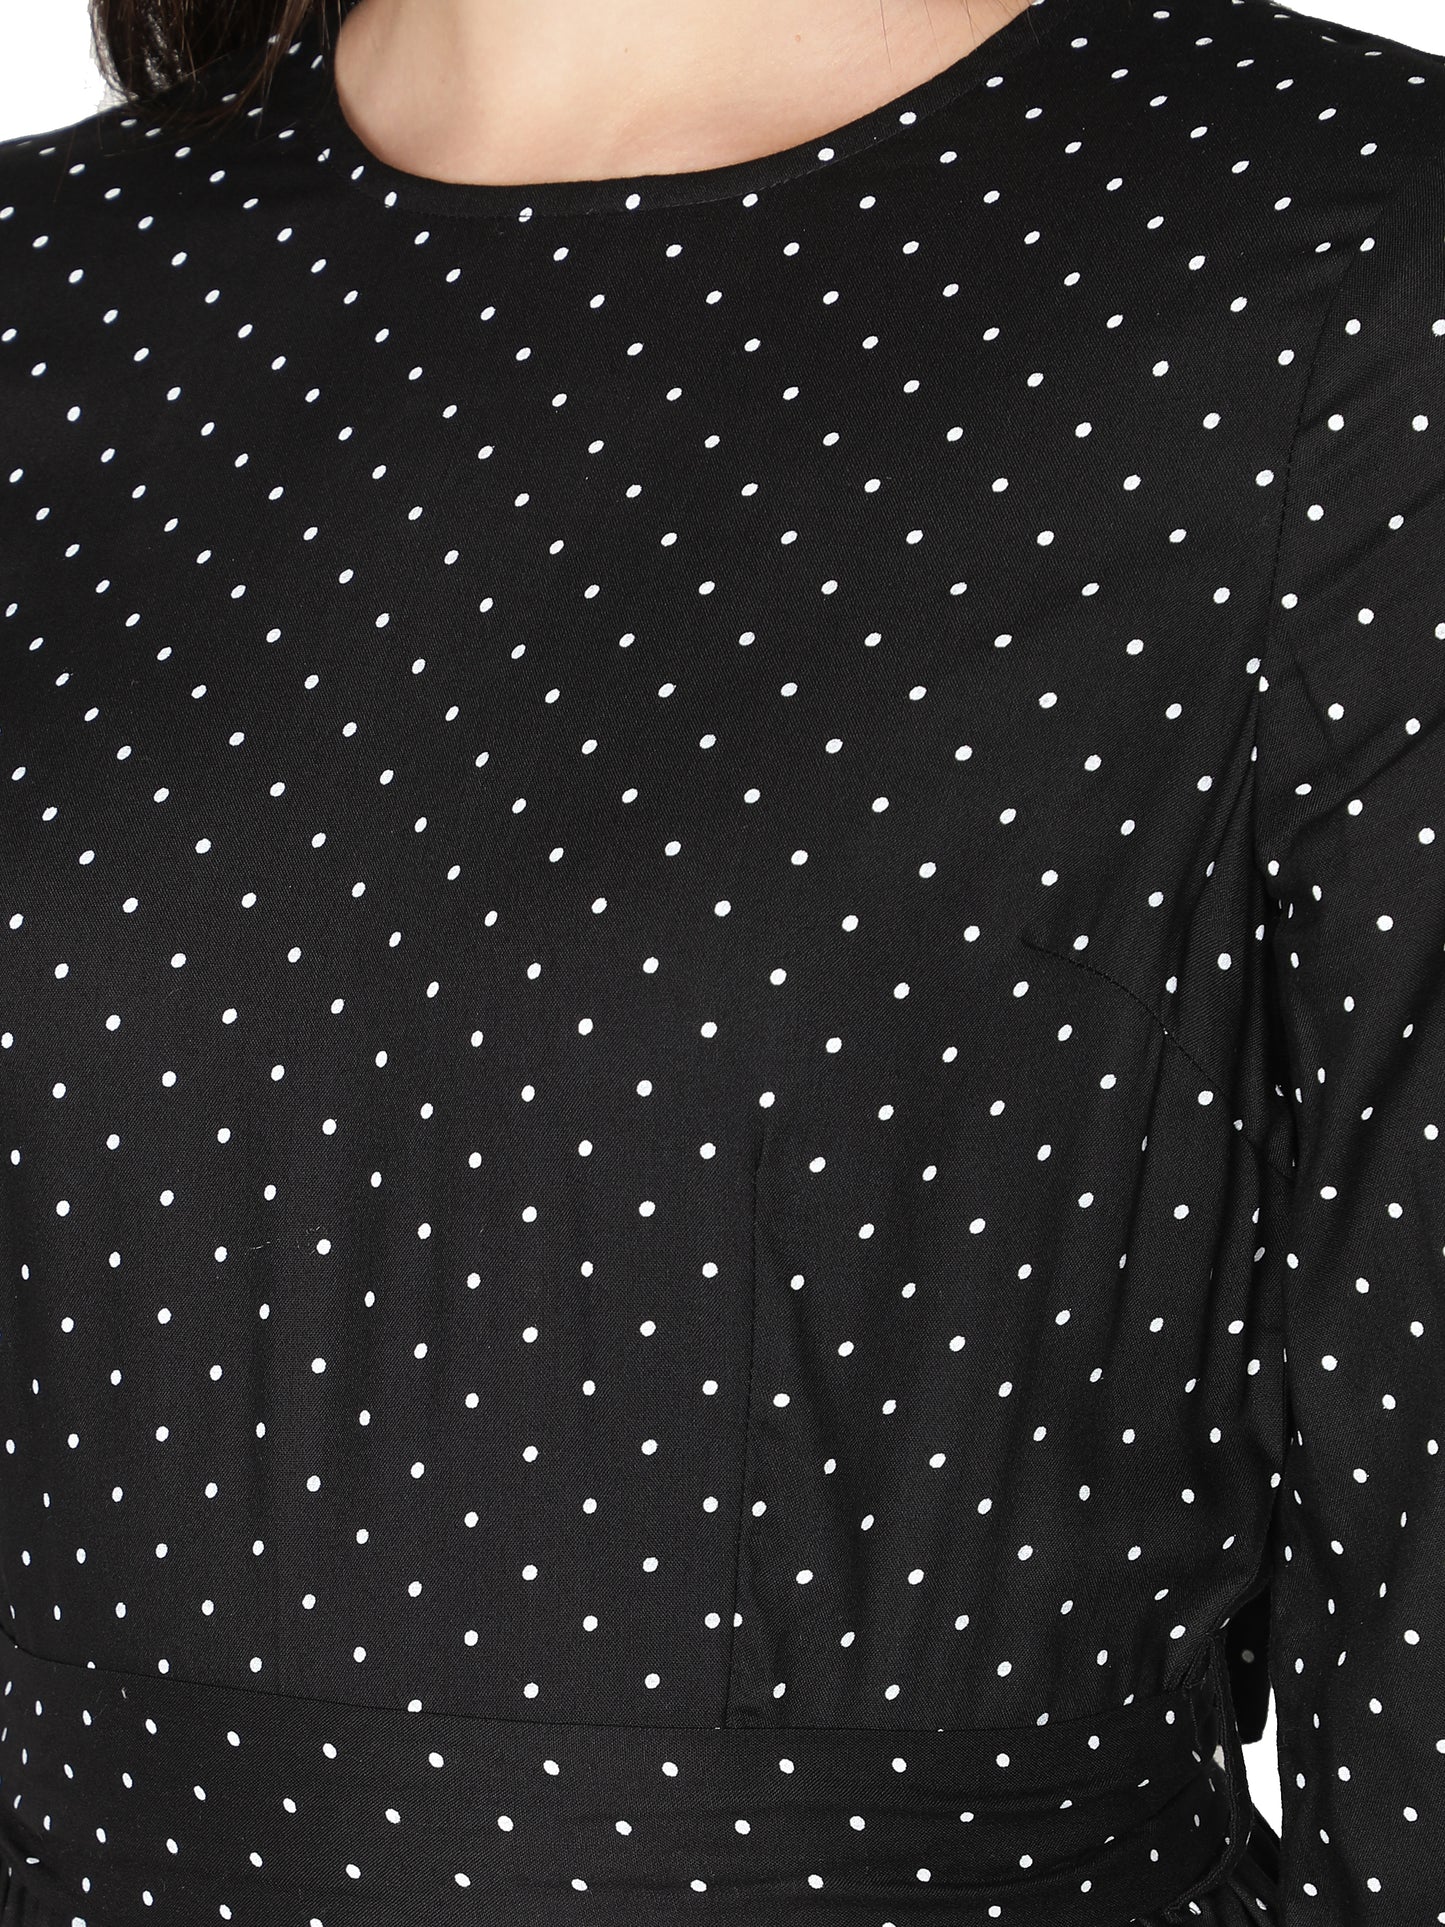 NUEVOSDAMAS Women's Rayon Dot Printed Designer Maxi Dress - Effortlessly Stylish Summer Elegance in Black